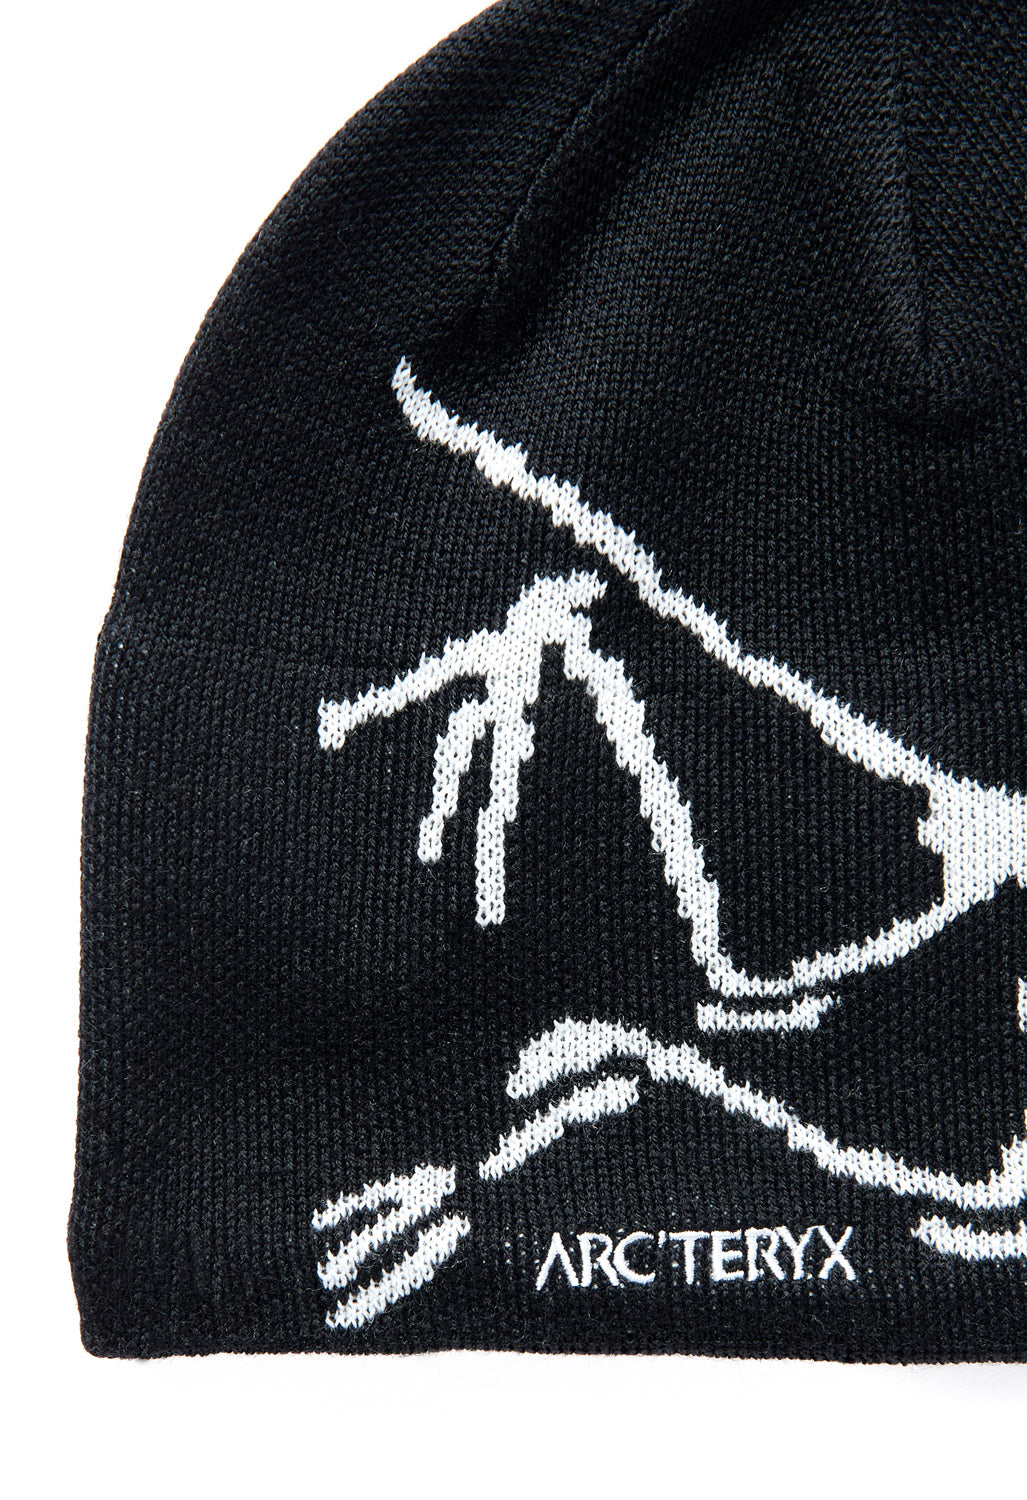 Arc'teryx Bird Head Toque - Orca